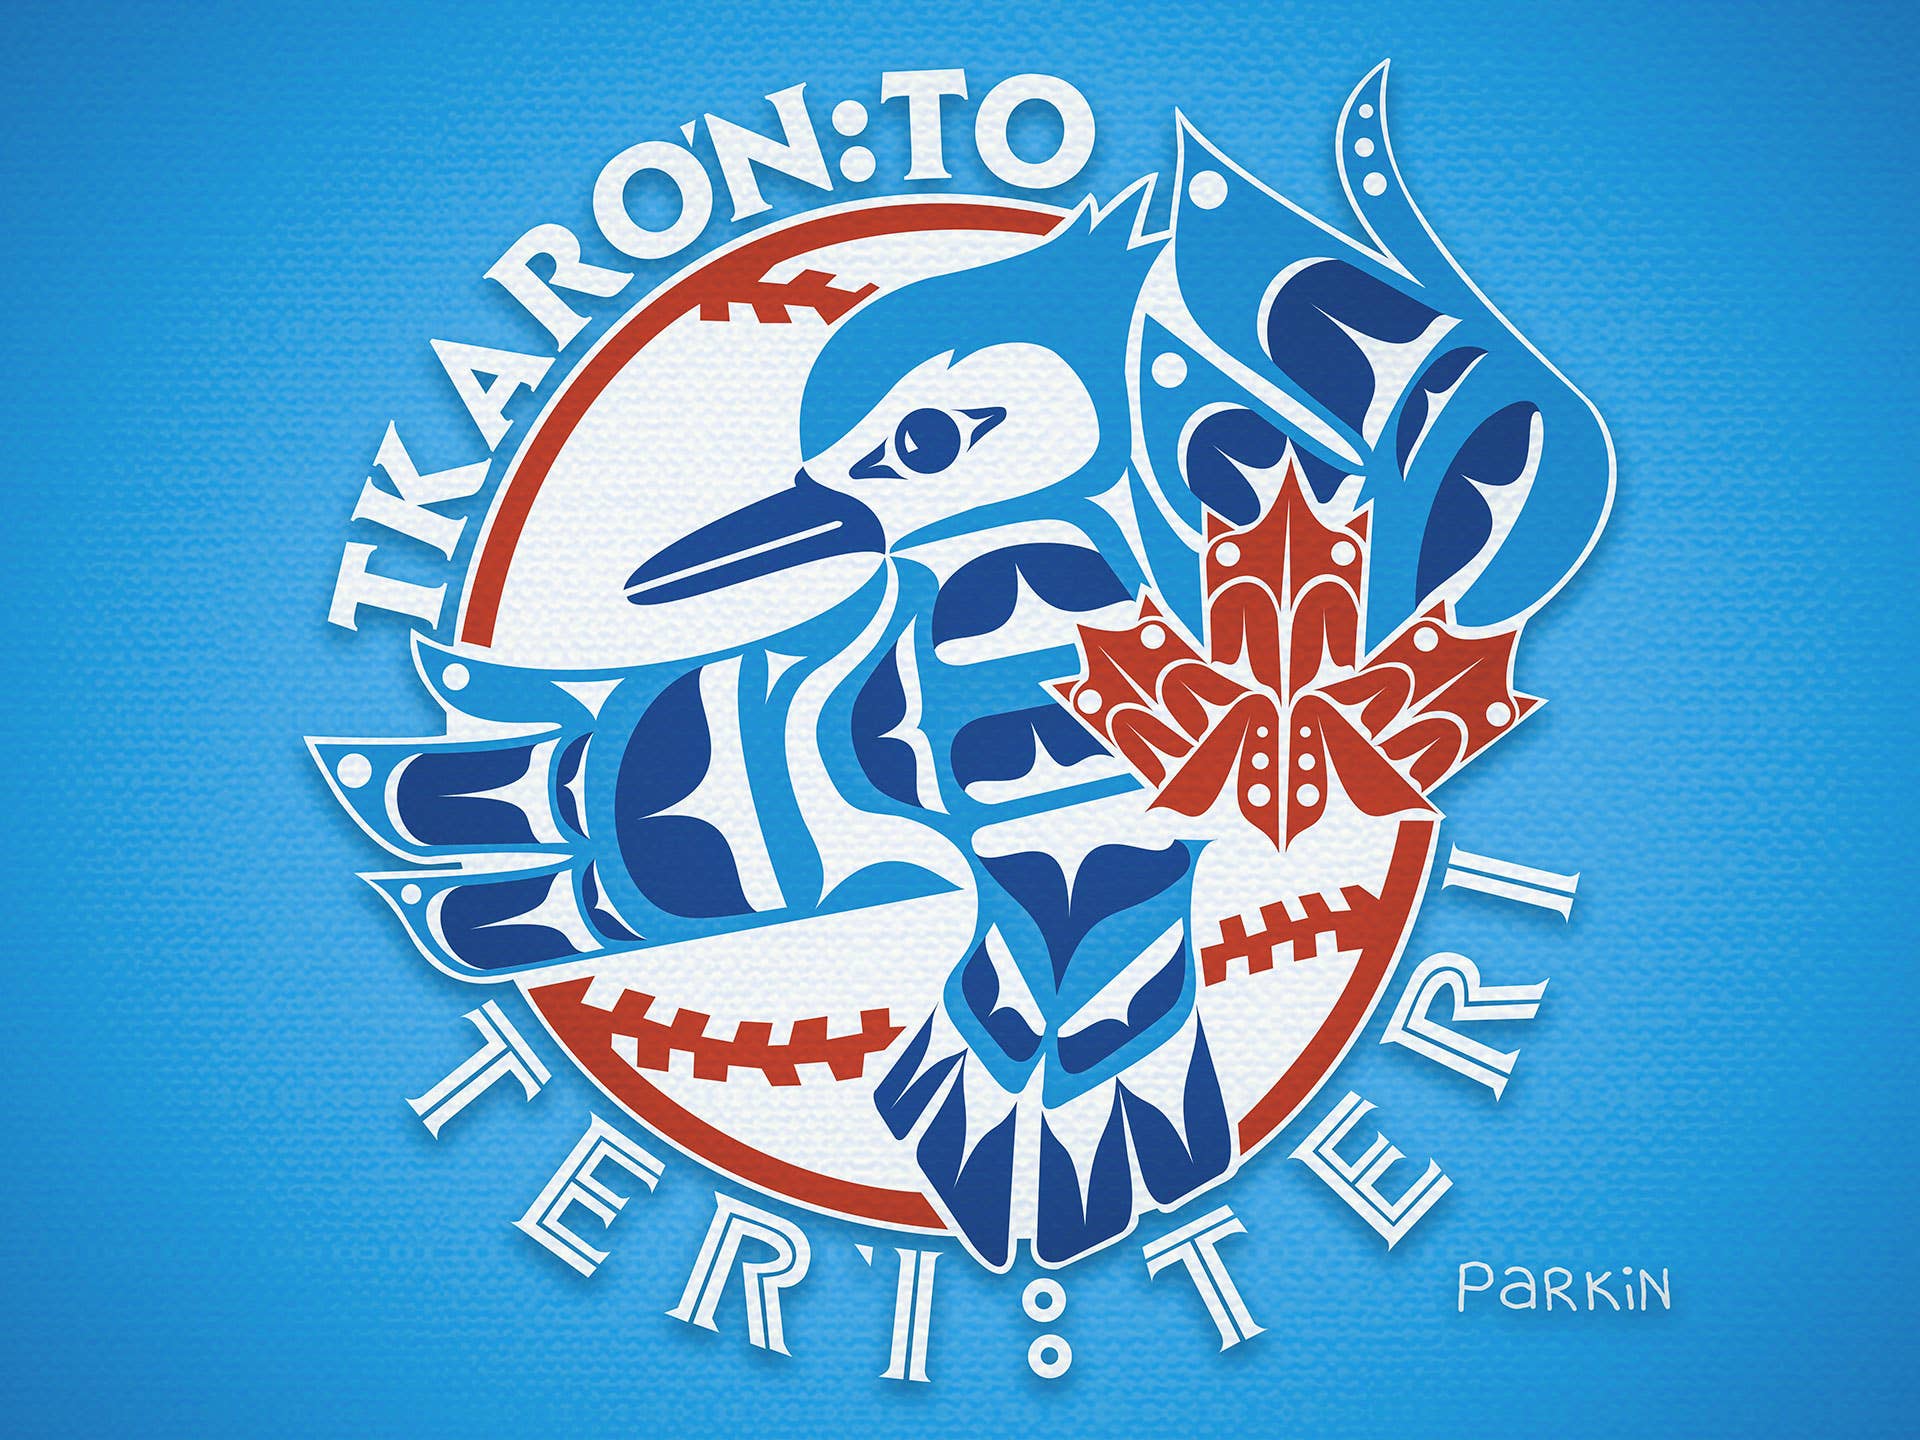 Toronto Blue Jays Tkaronto jersey